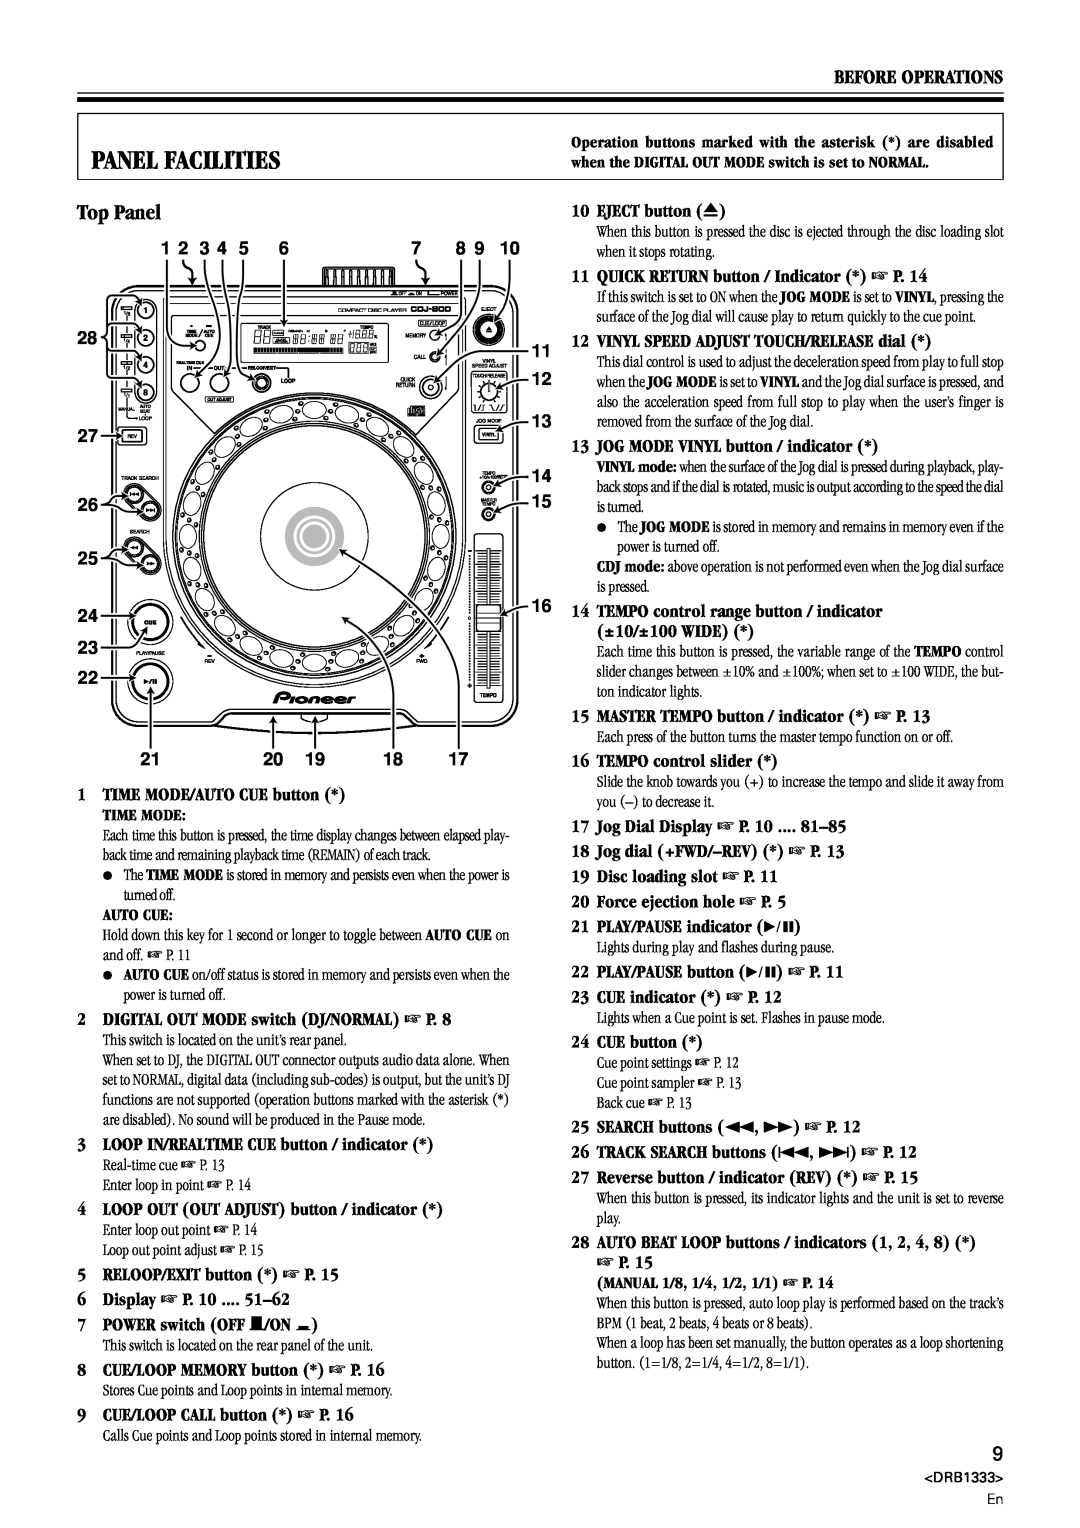 Pioneer CDJ-800 manual Panel Facilities, Before Operations, 1 2 